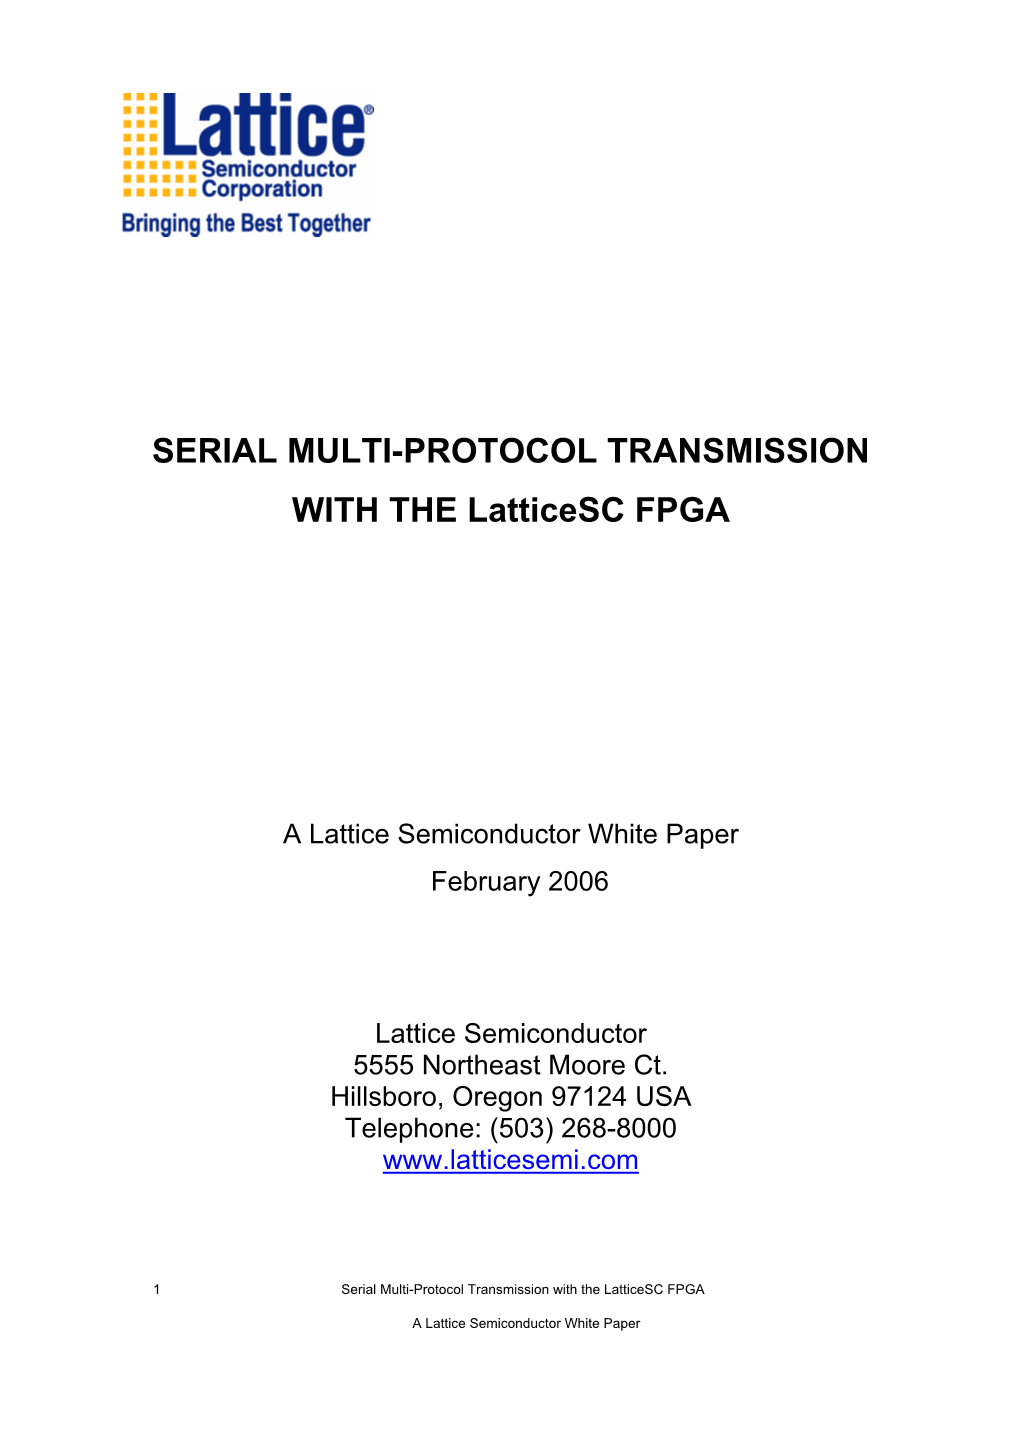 Serial Multiprotocol Transmission with the Latticesc FPGA